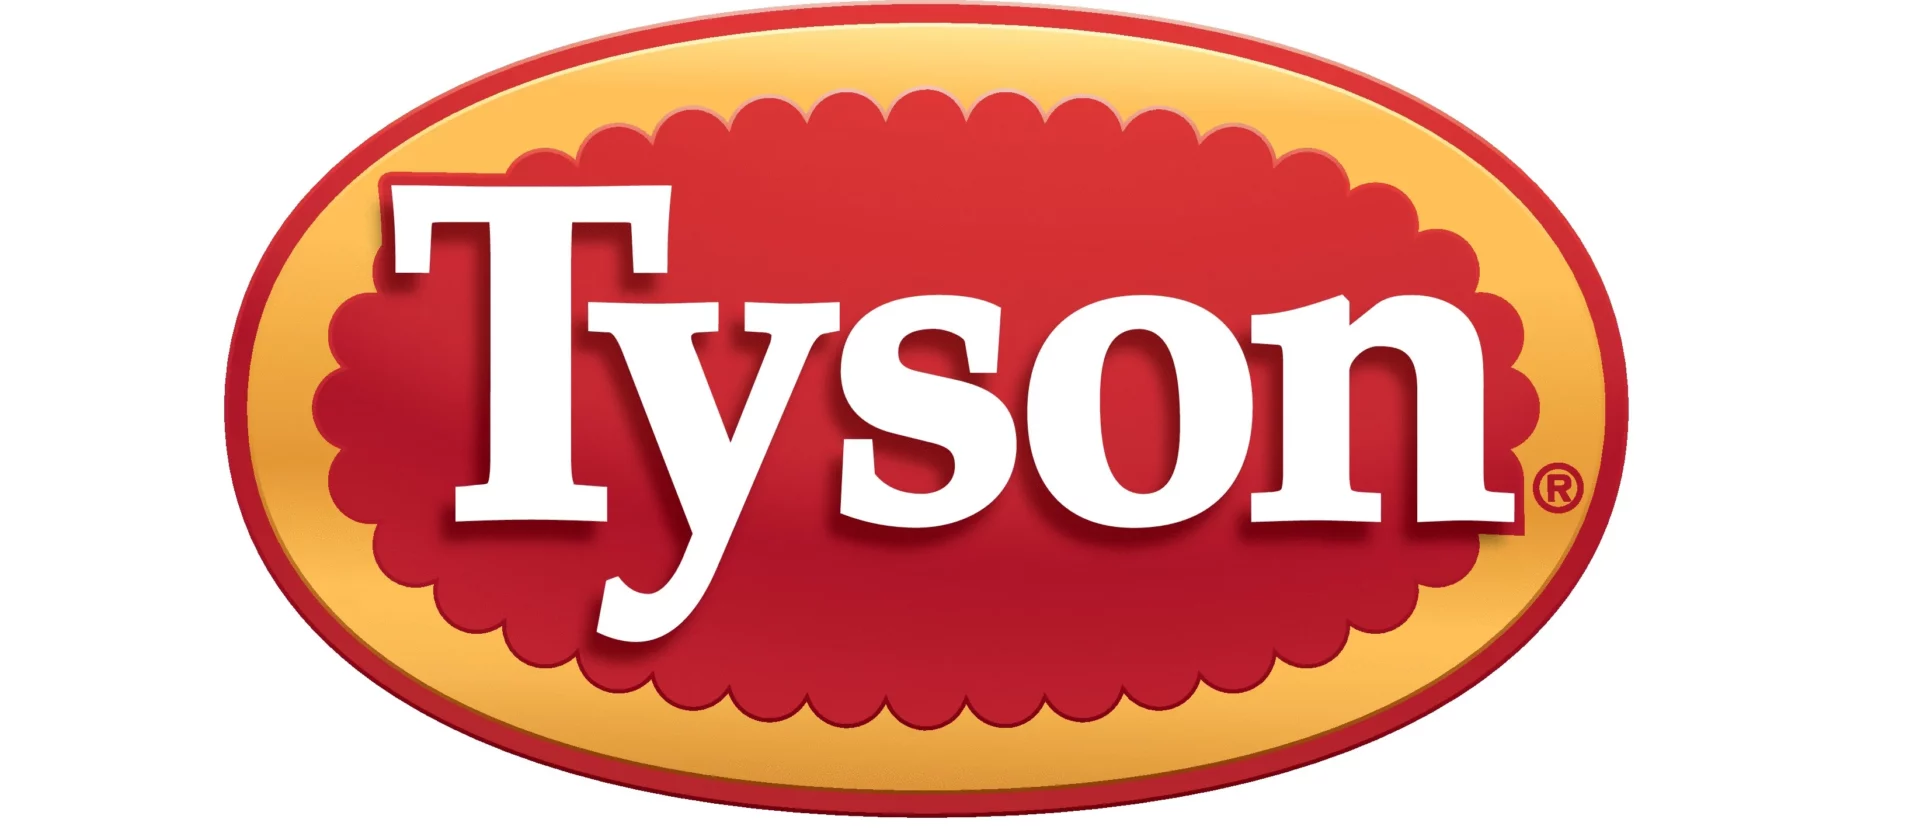 Clarifying Tyson Foods Misinformation